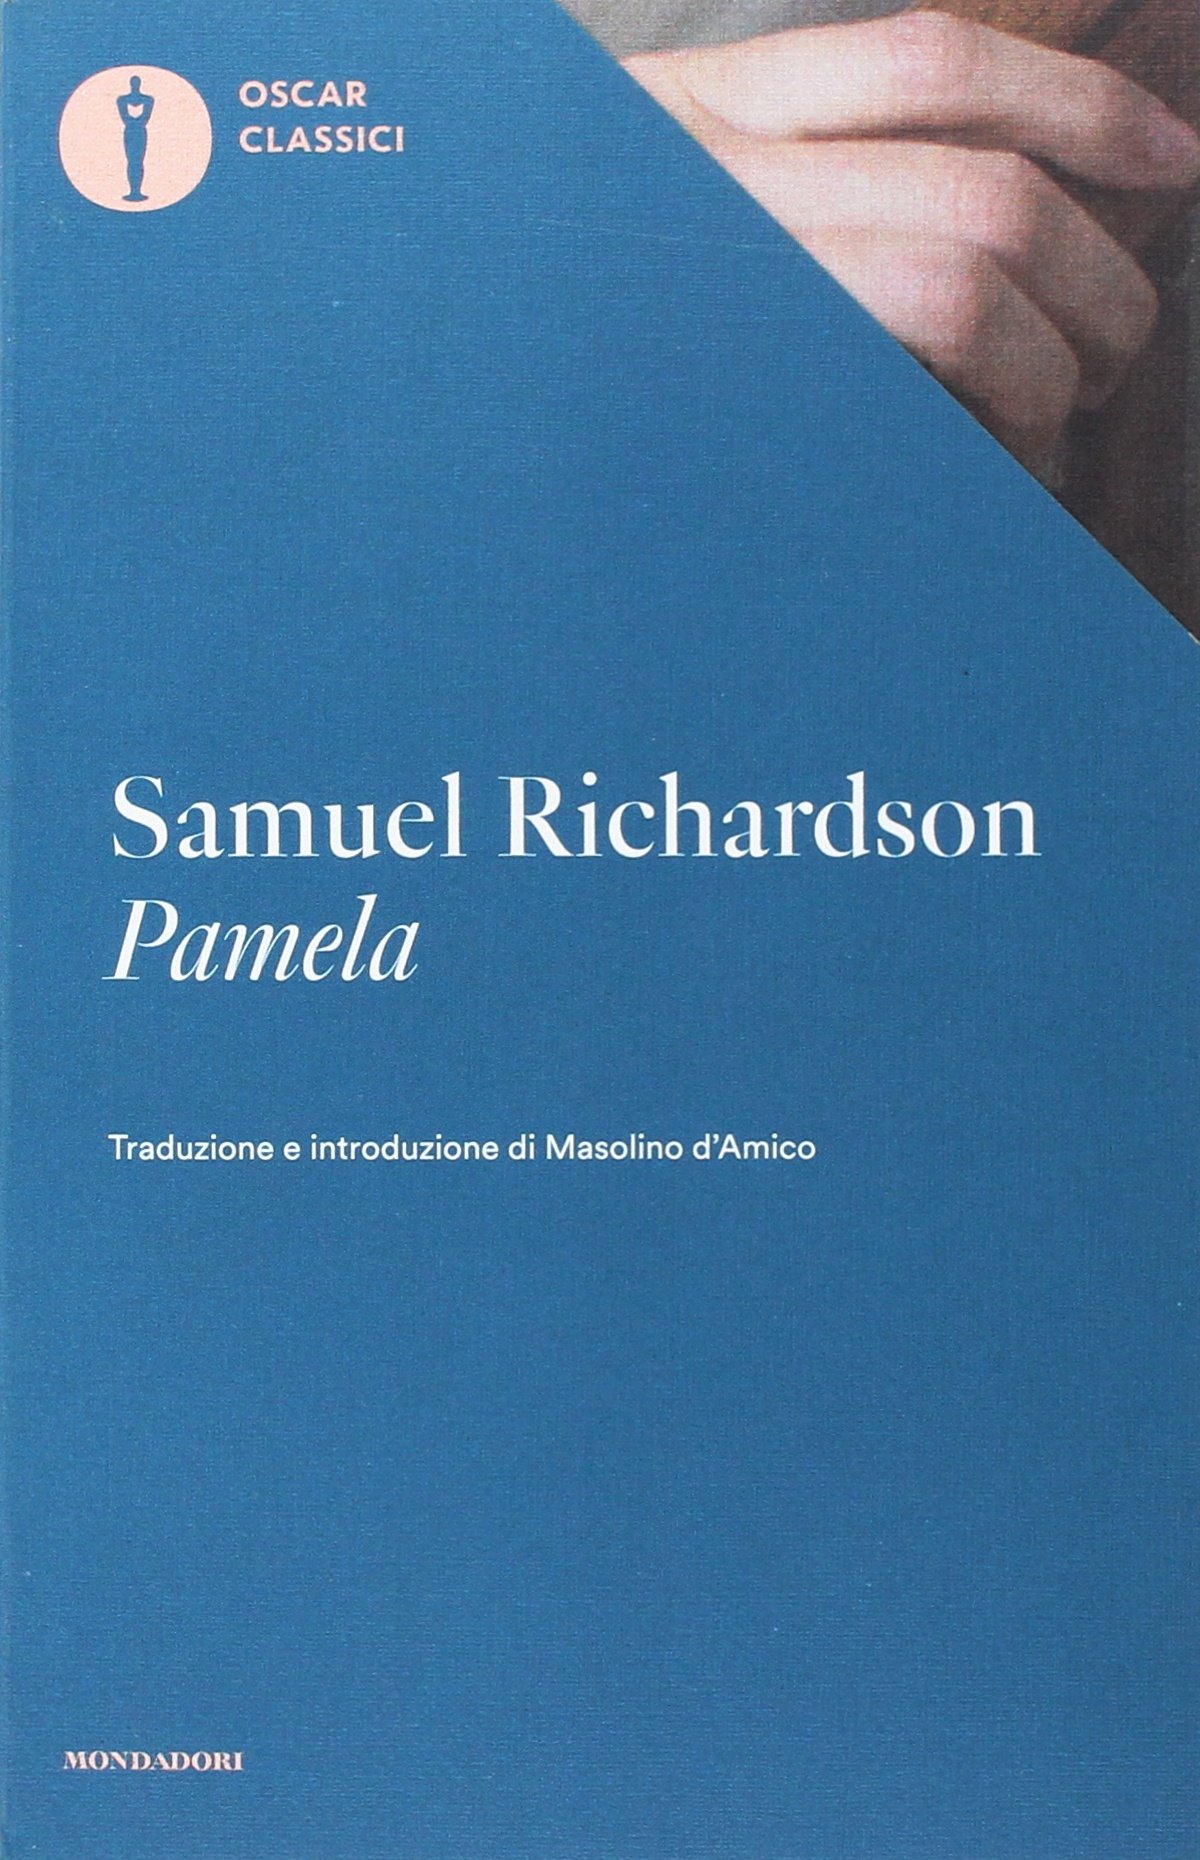 Copertina di Pamela, romanzo epistolare inglese scritto da Samuel Richardson